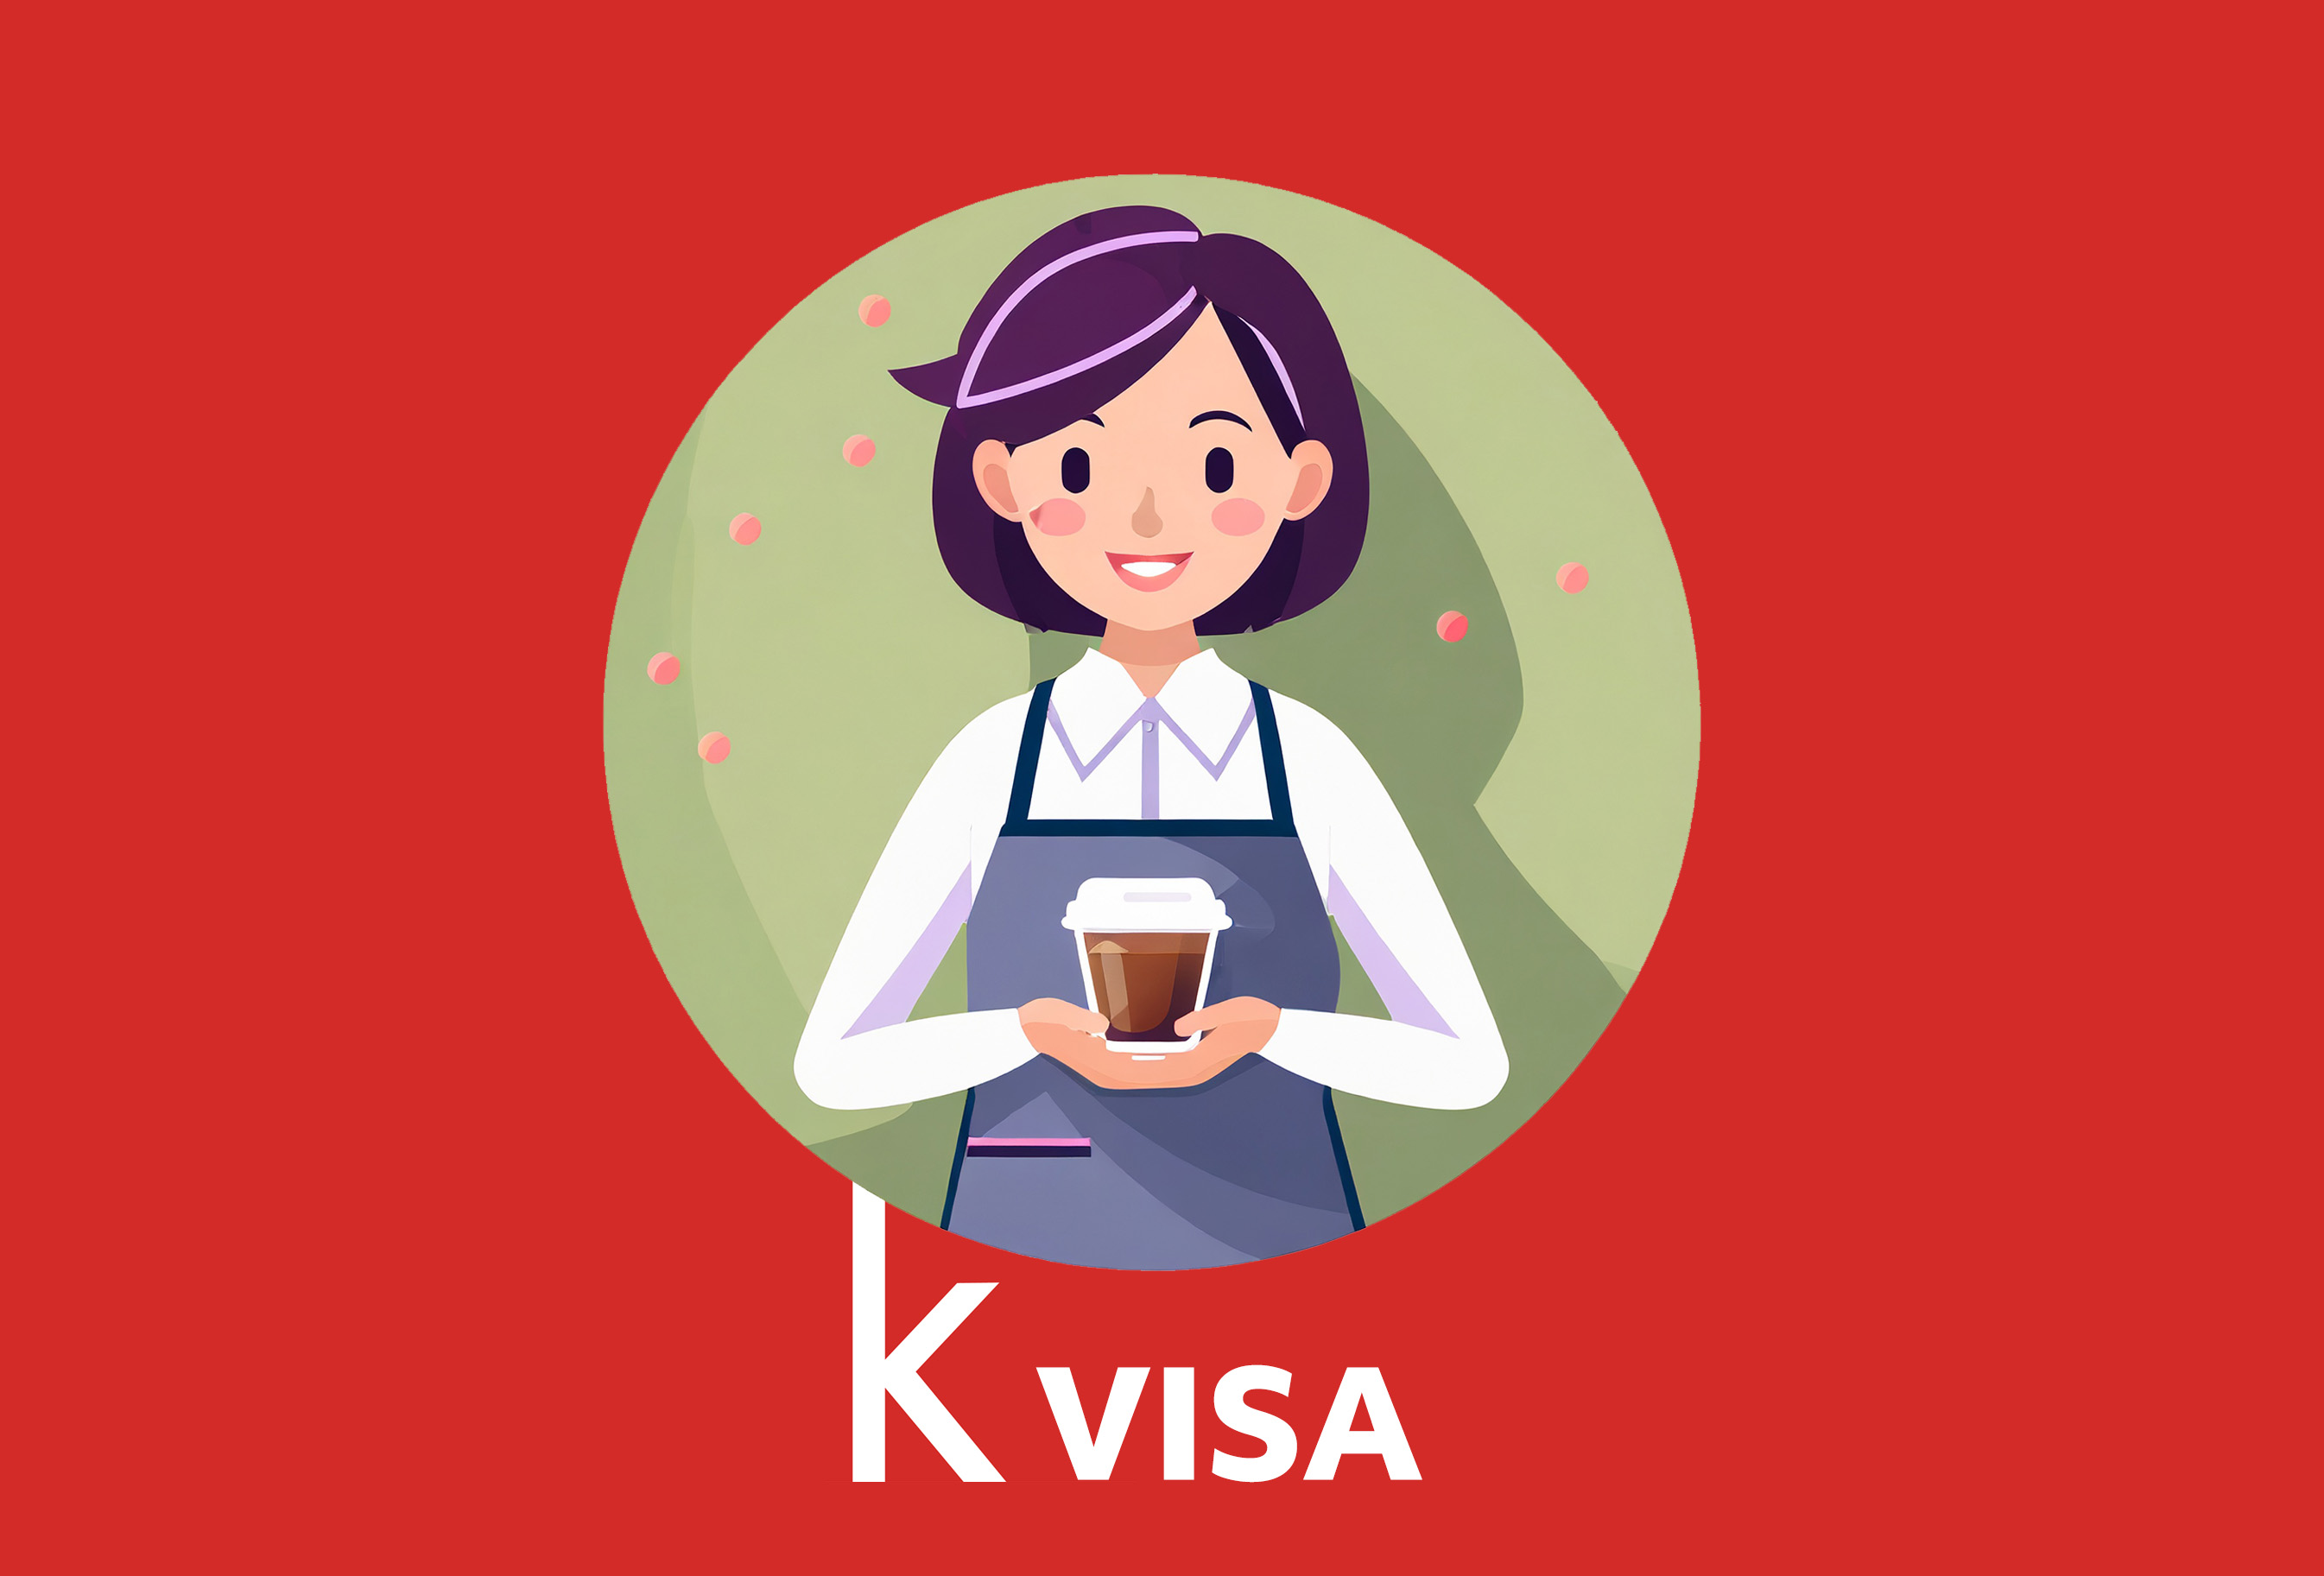 H1 Visa profile.jpg